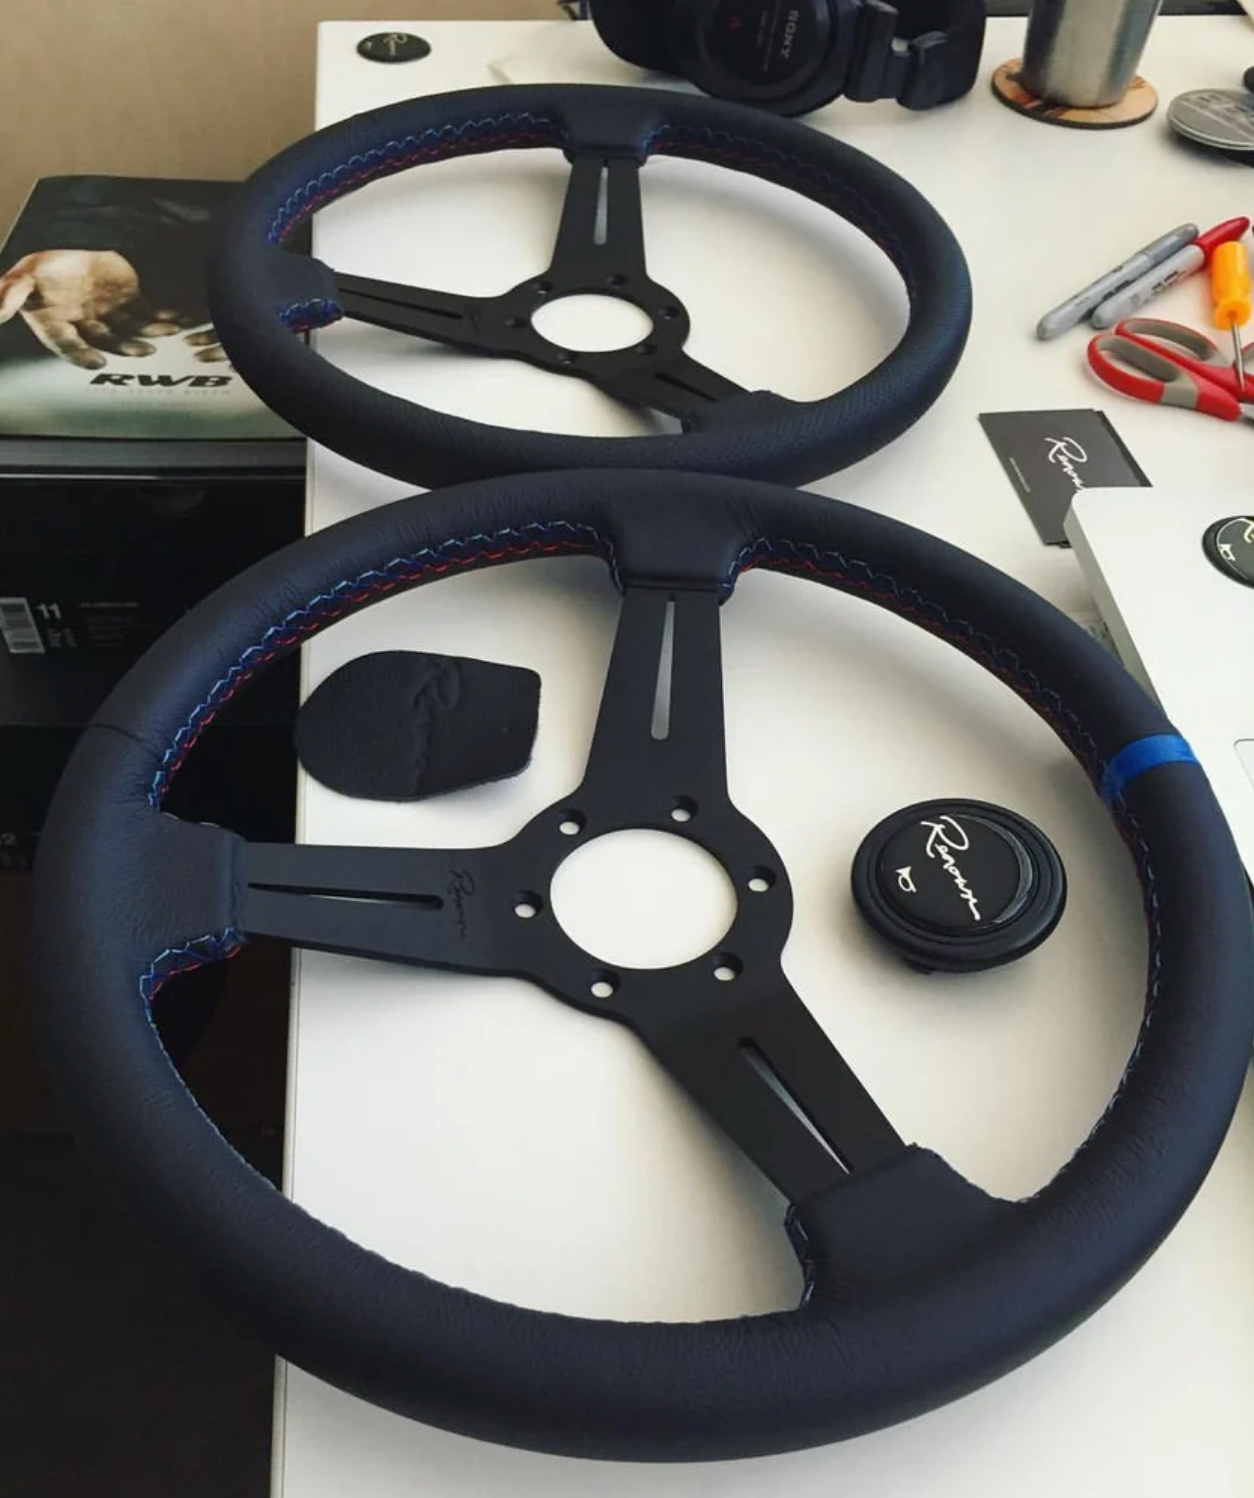 Renown Mille Motorsport Competition Steering Wheel